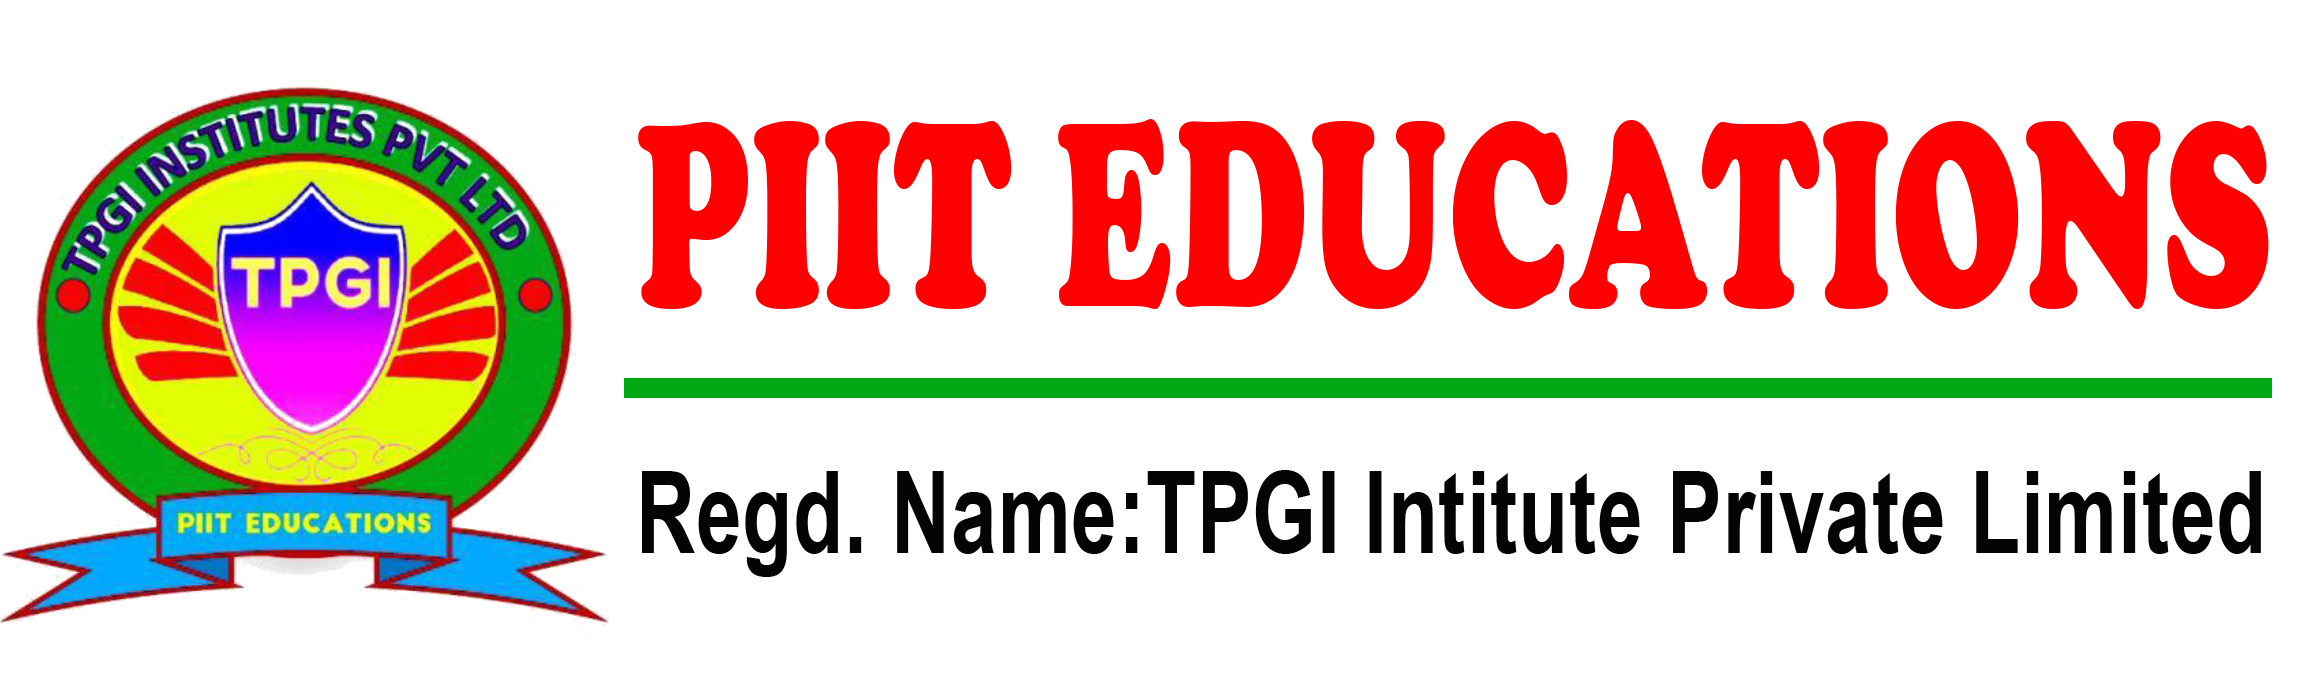 logo-PIIT-EDUCATIONS